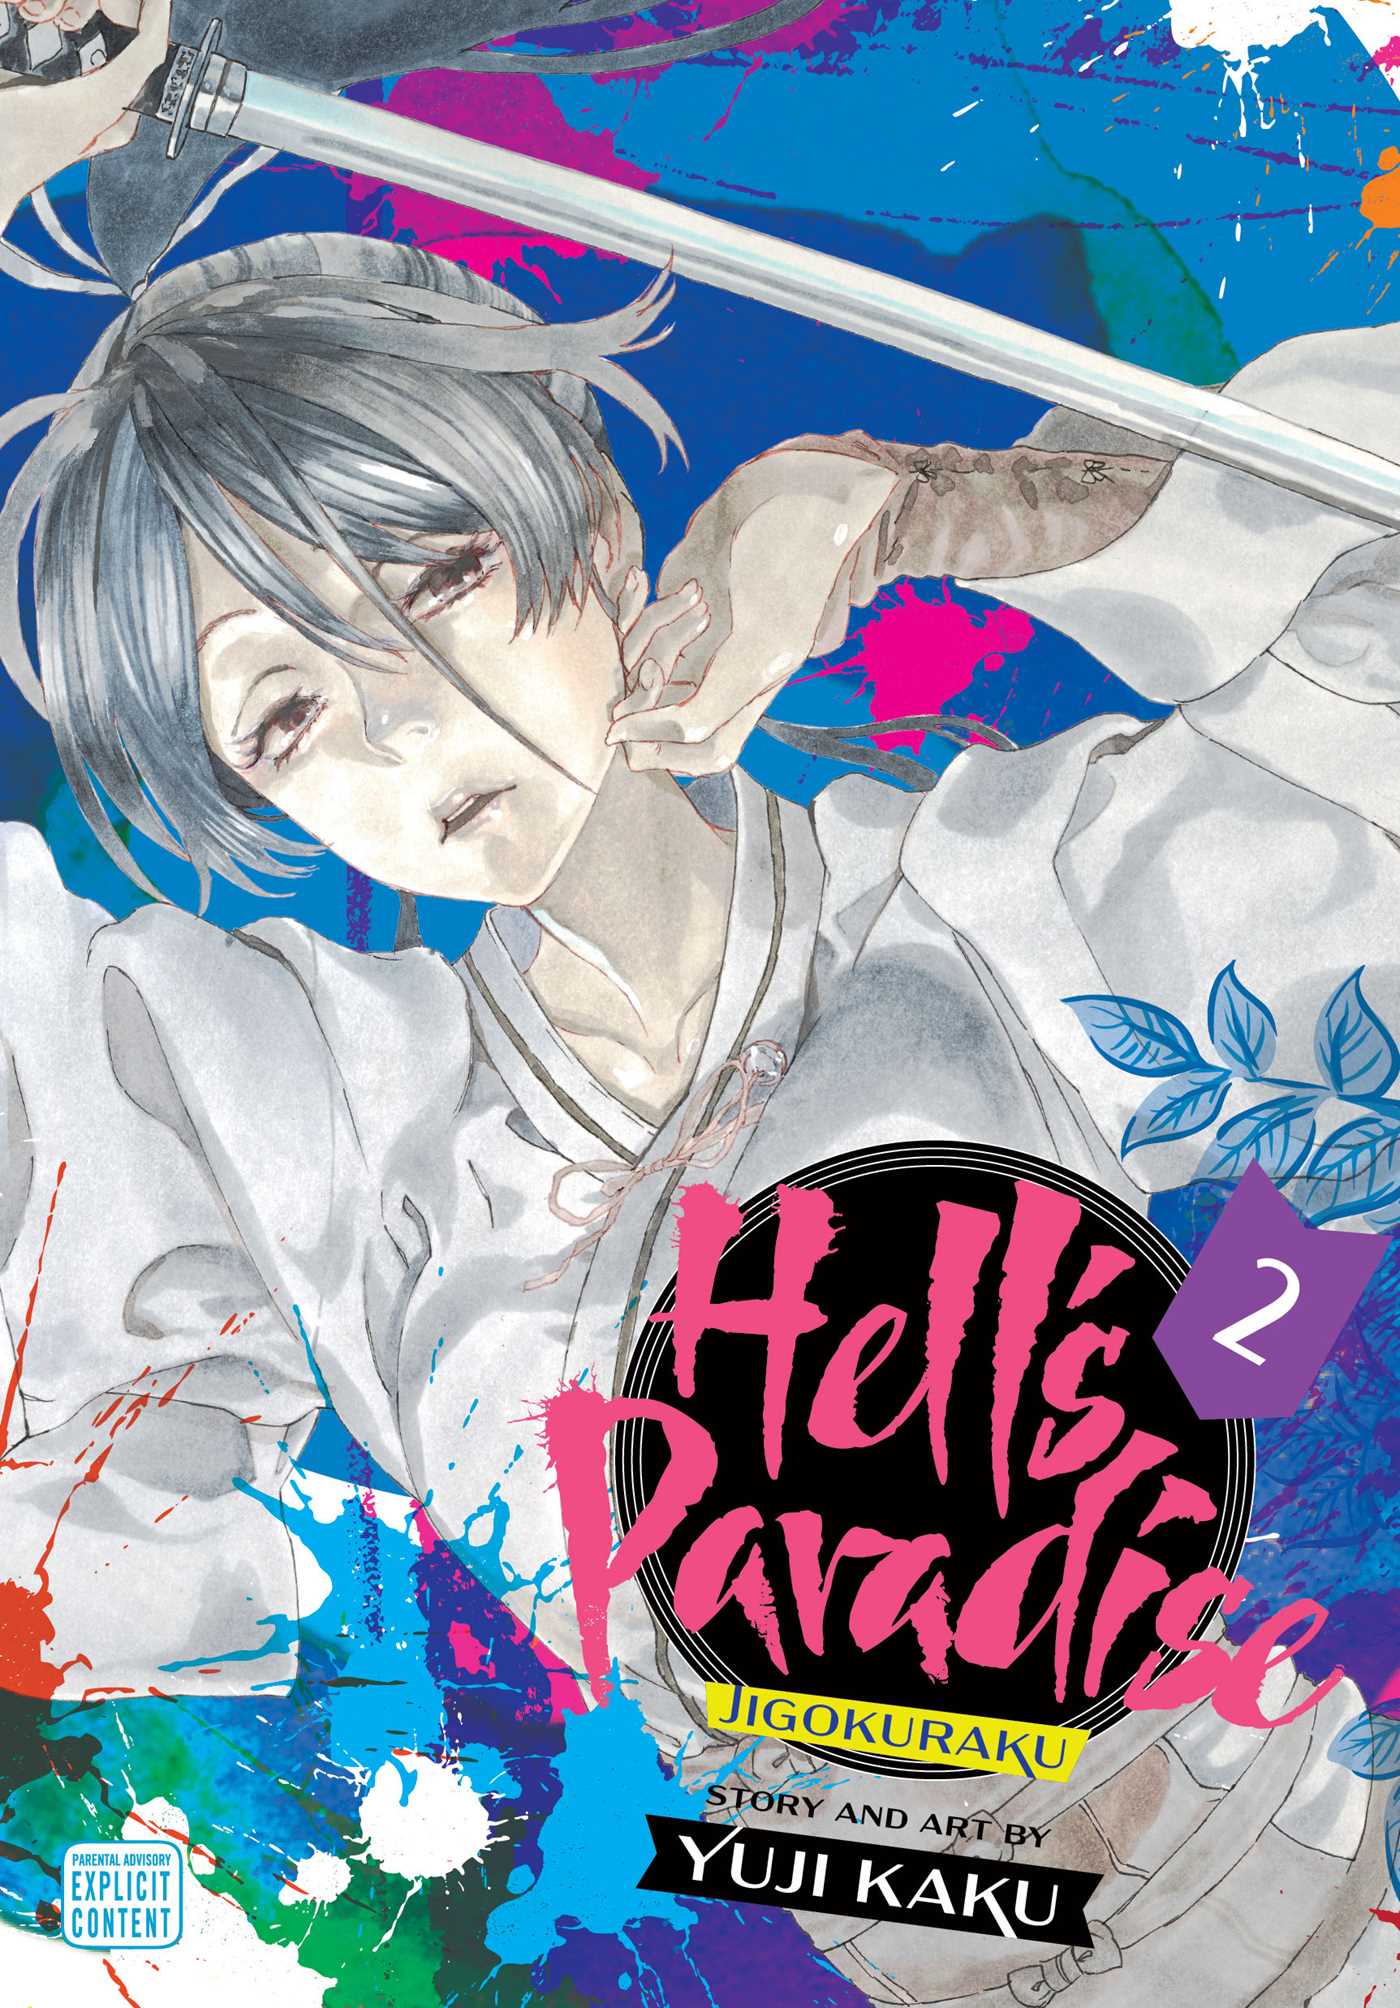 Hell's Paradise: Jigokuraku, Vol. 2. Book by Yuji Kaku. Official Publisher Page. Simon & Schuster